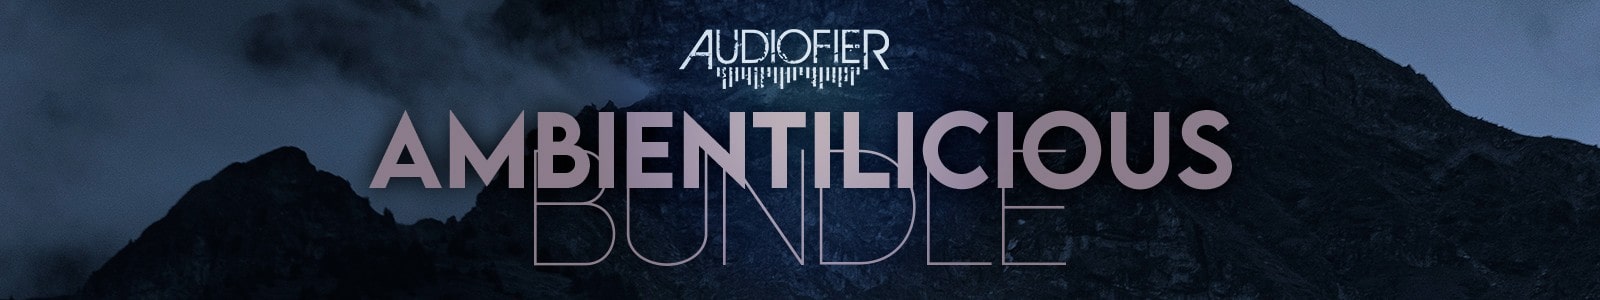 AMBIENTILICIOUS Bundle by Audiofier